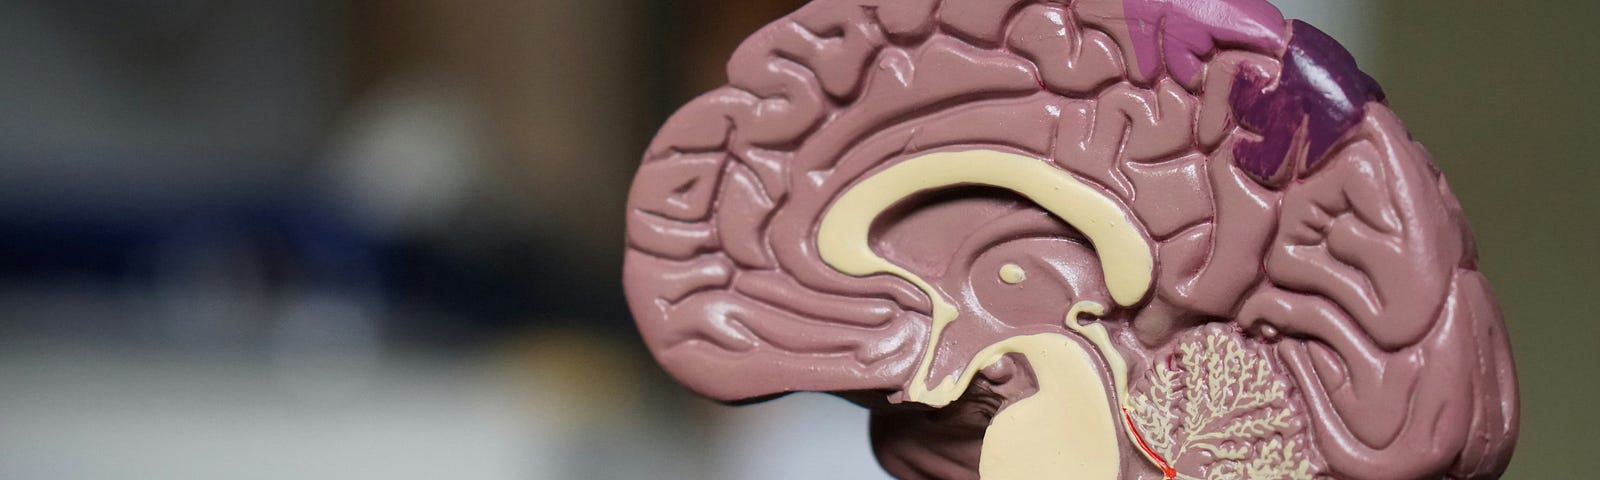 Model of section through human brain